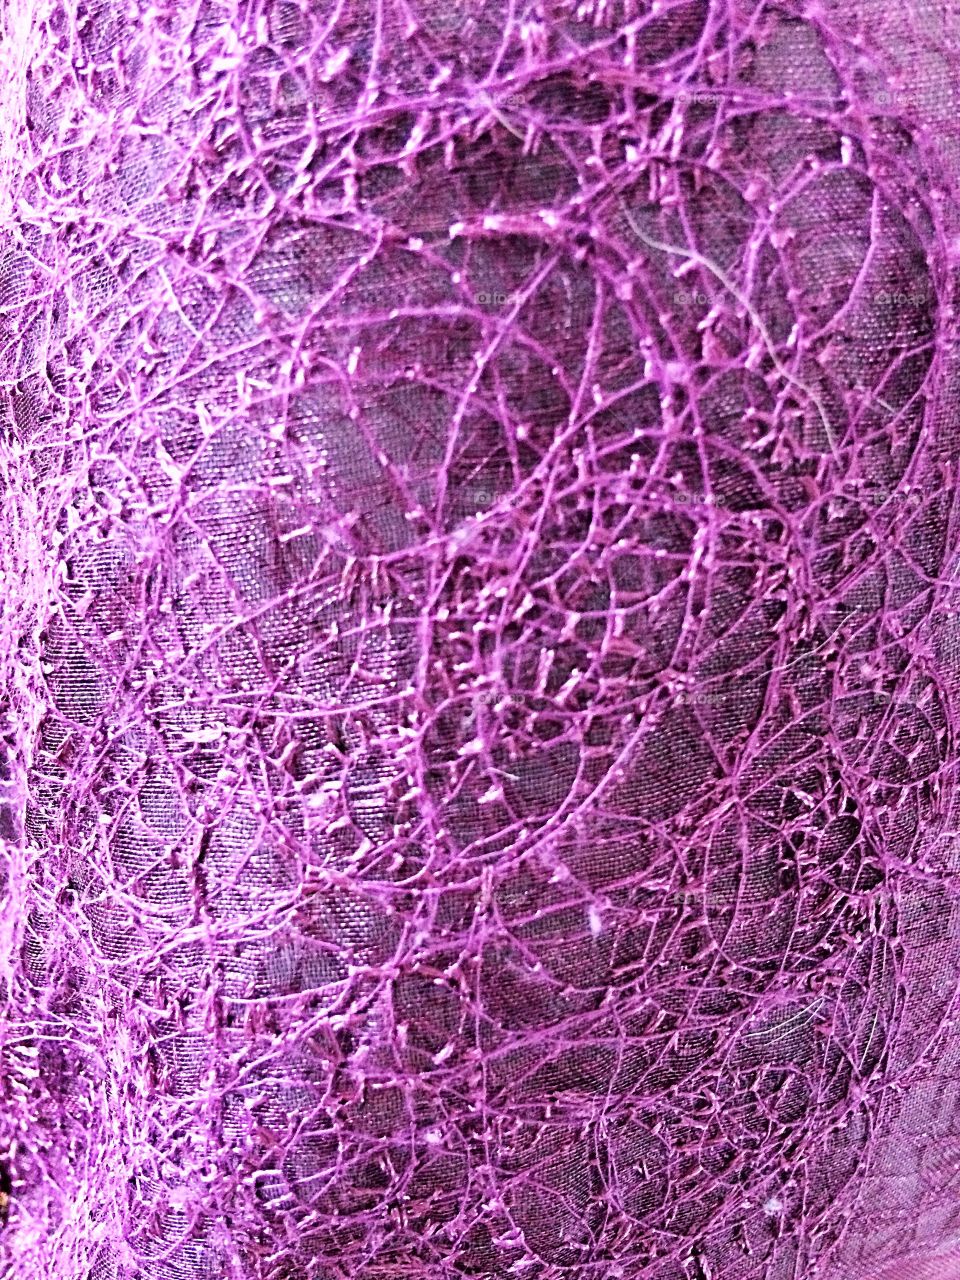  Purple/ Delicate cushion fabric